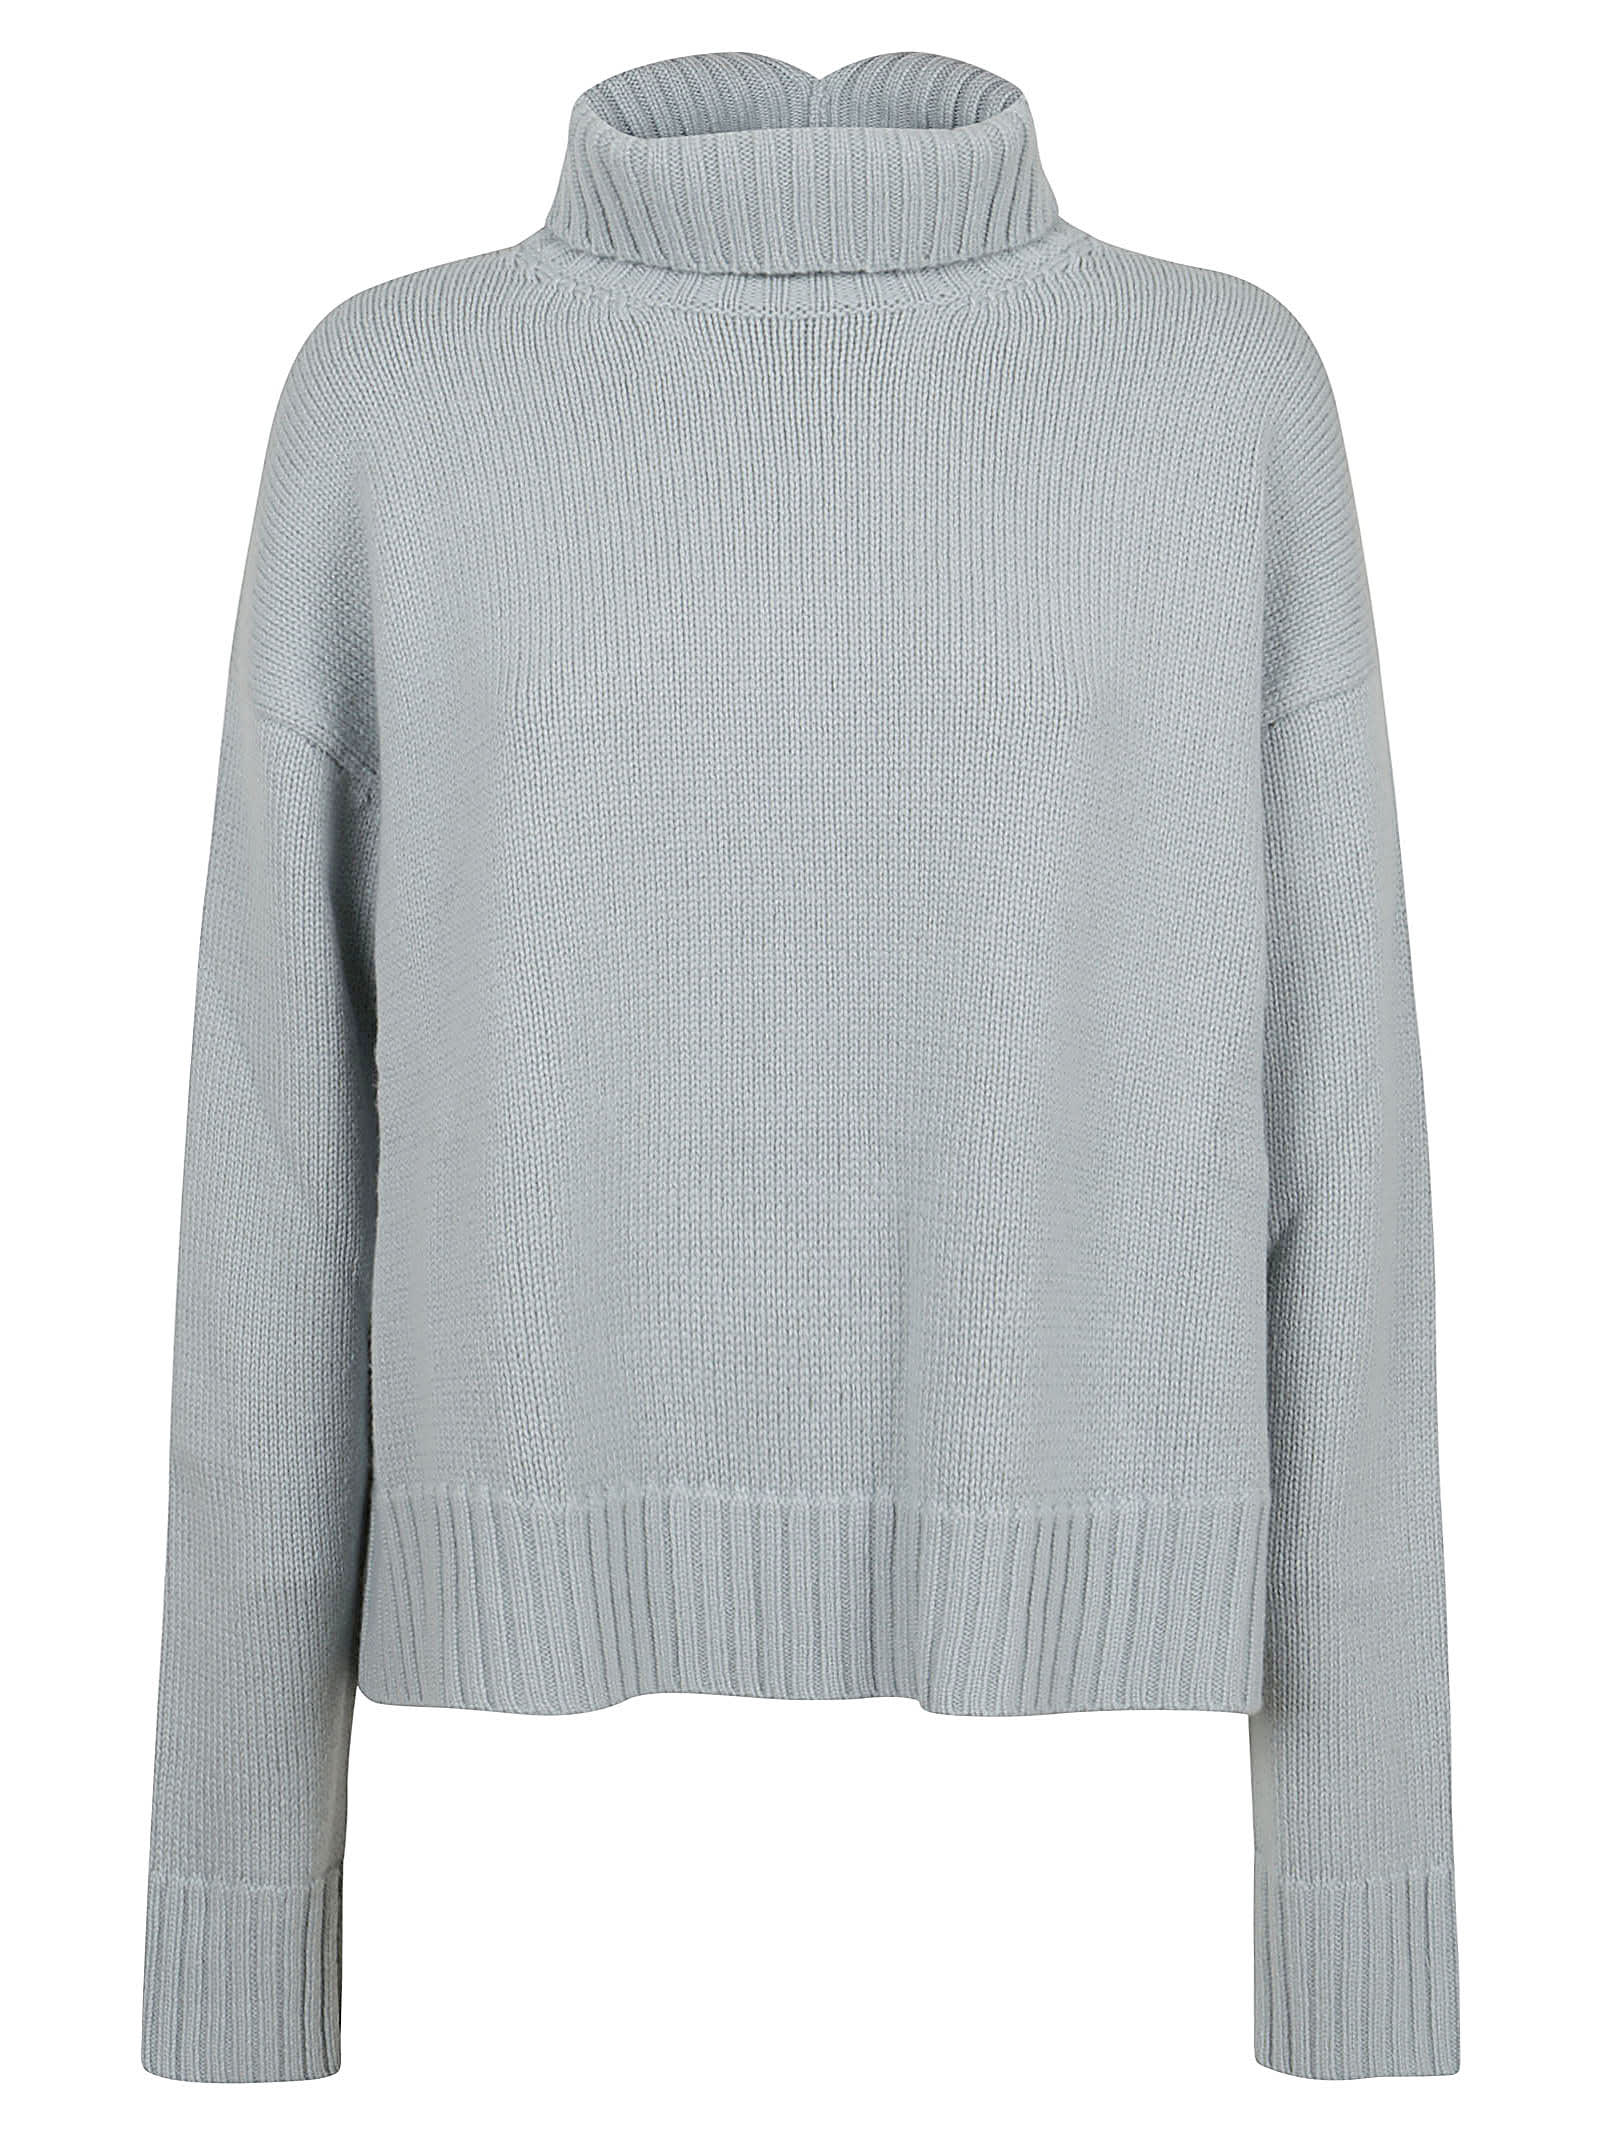 Jil Sander Sweater Hn Ls In Artic | ModeSens